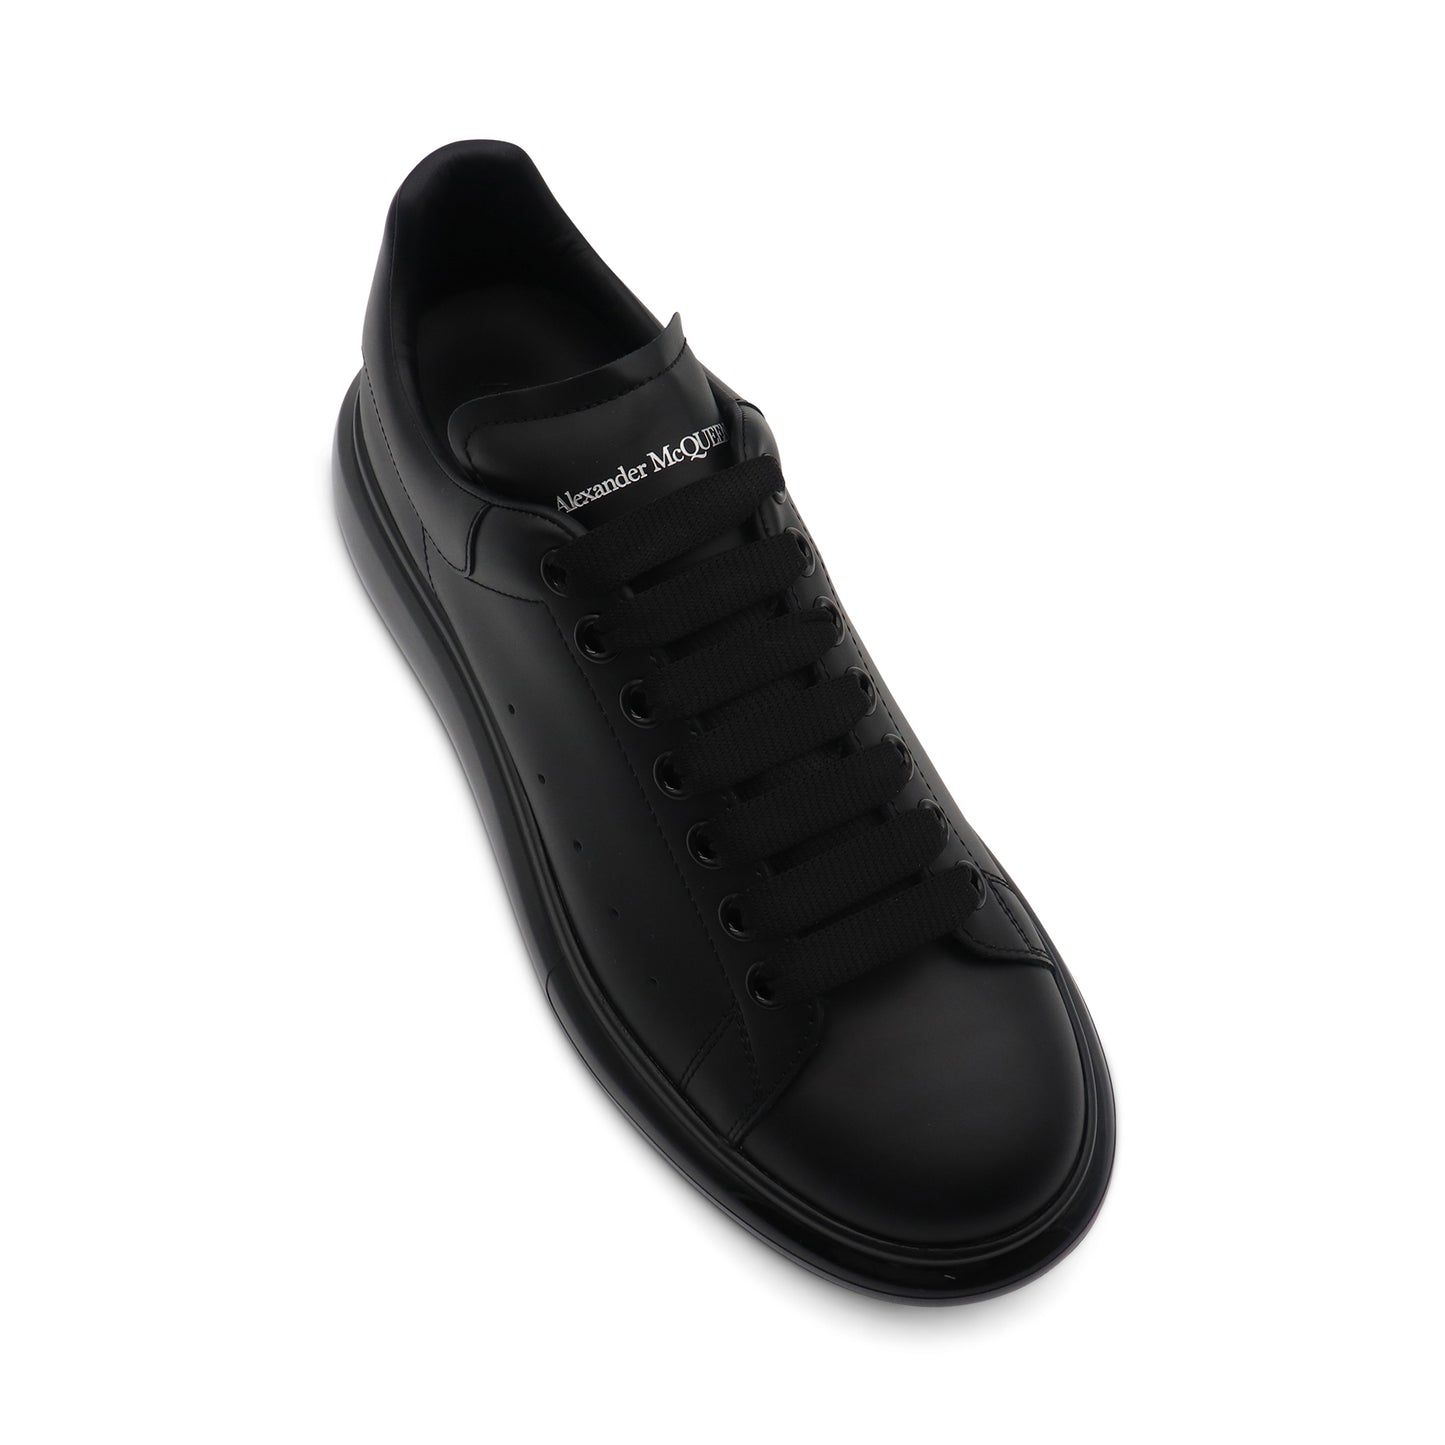 Larry Transparent Sole Sneaker in Black/Black